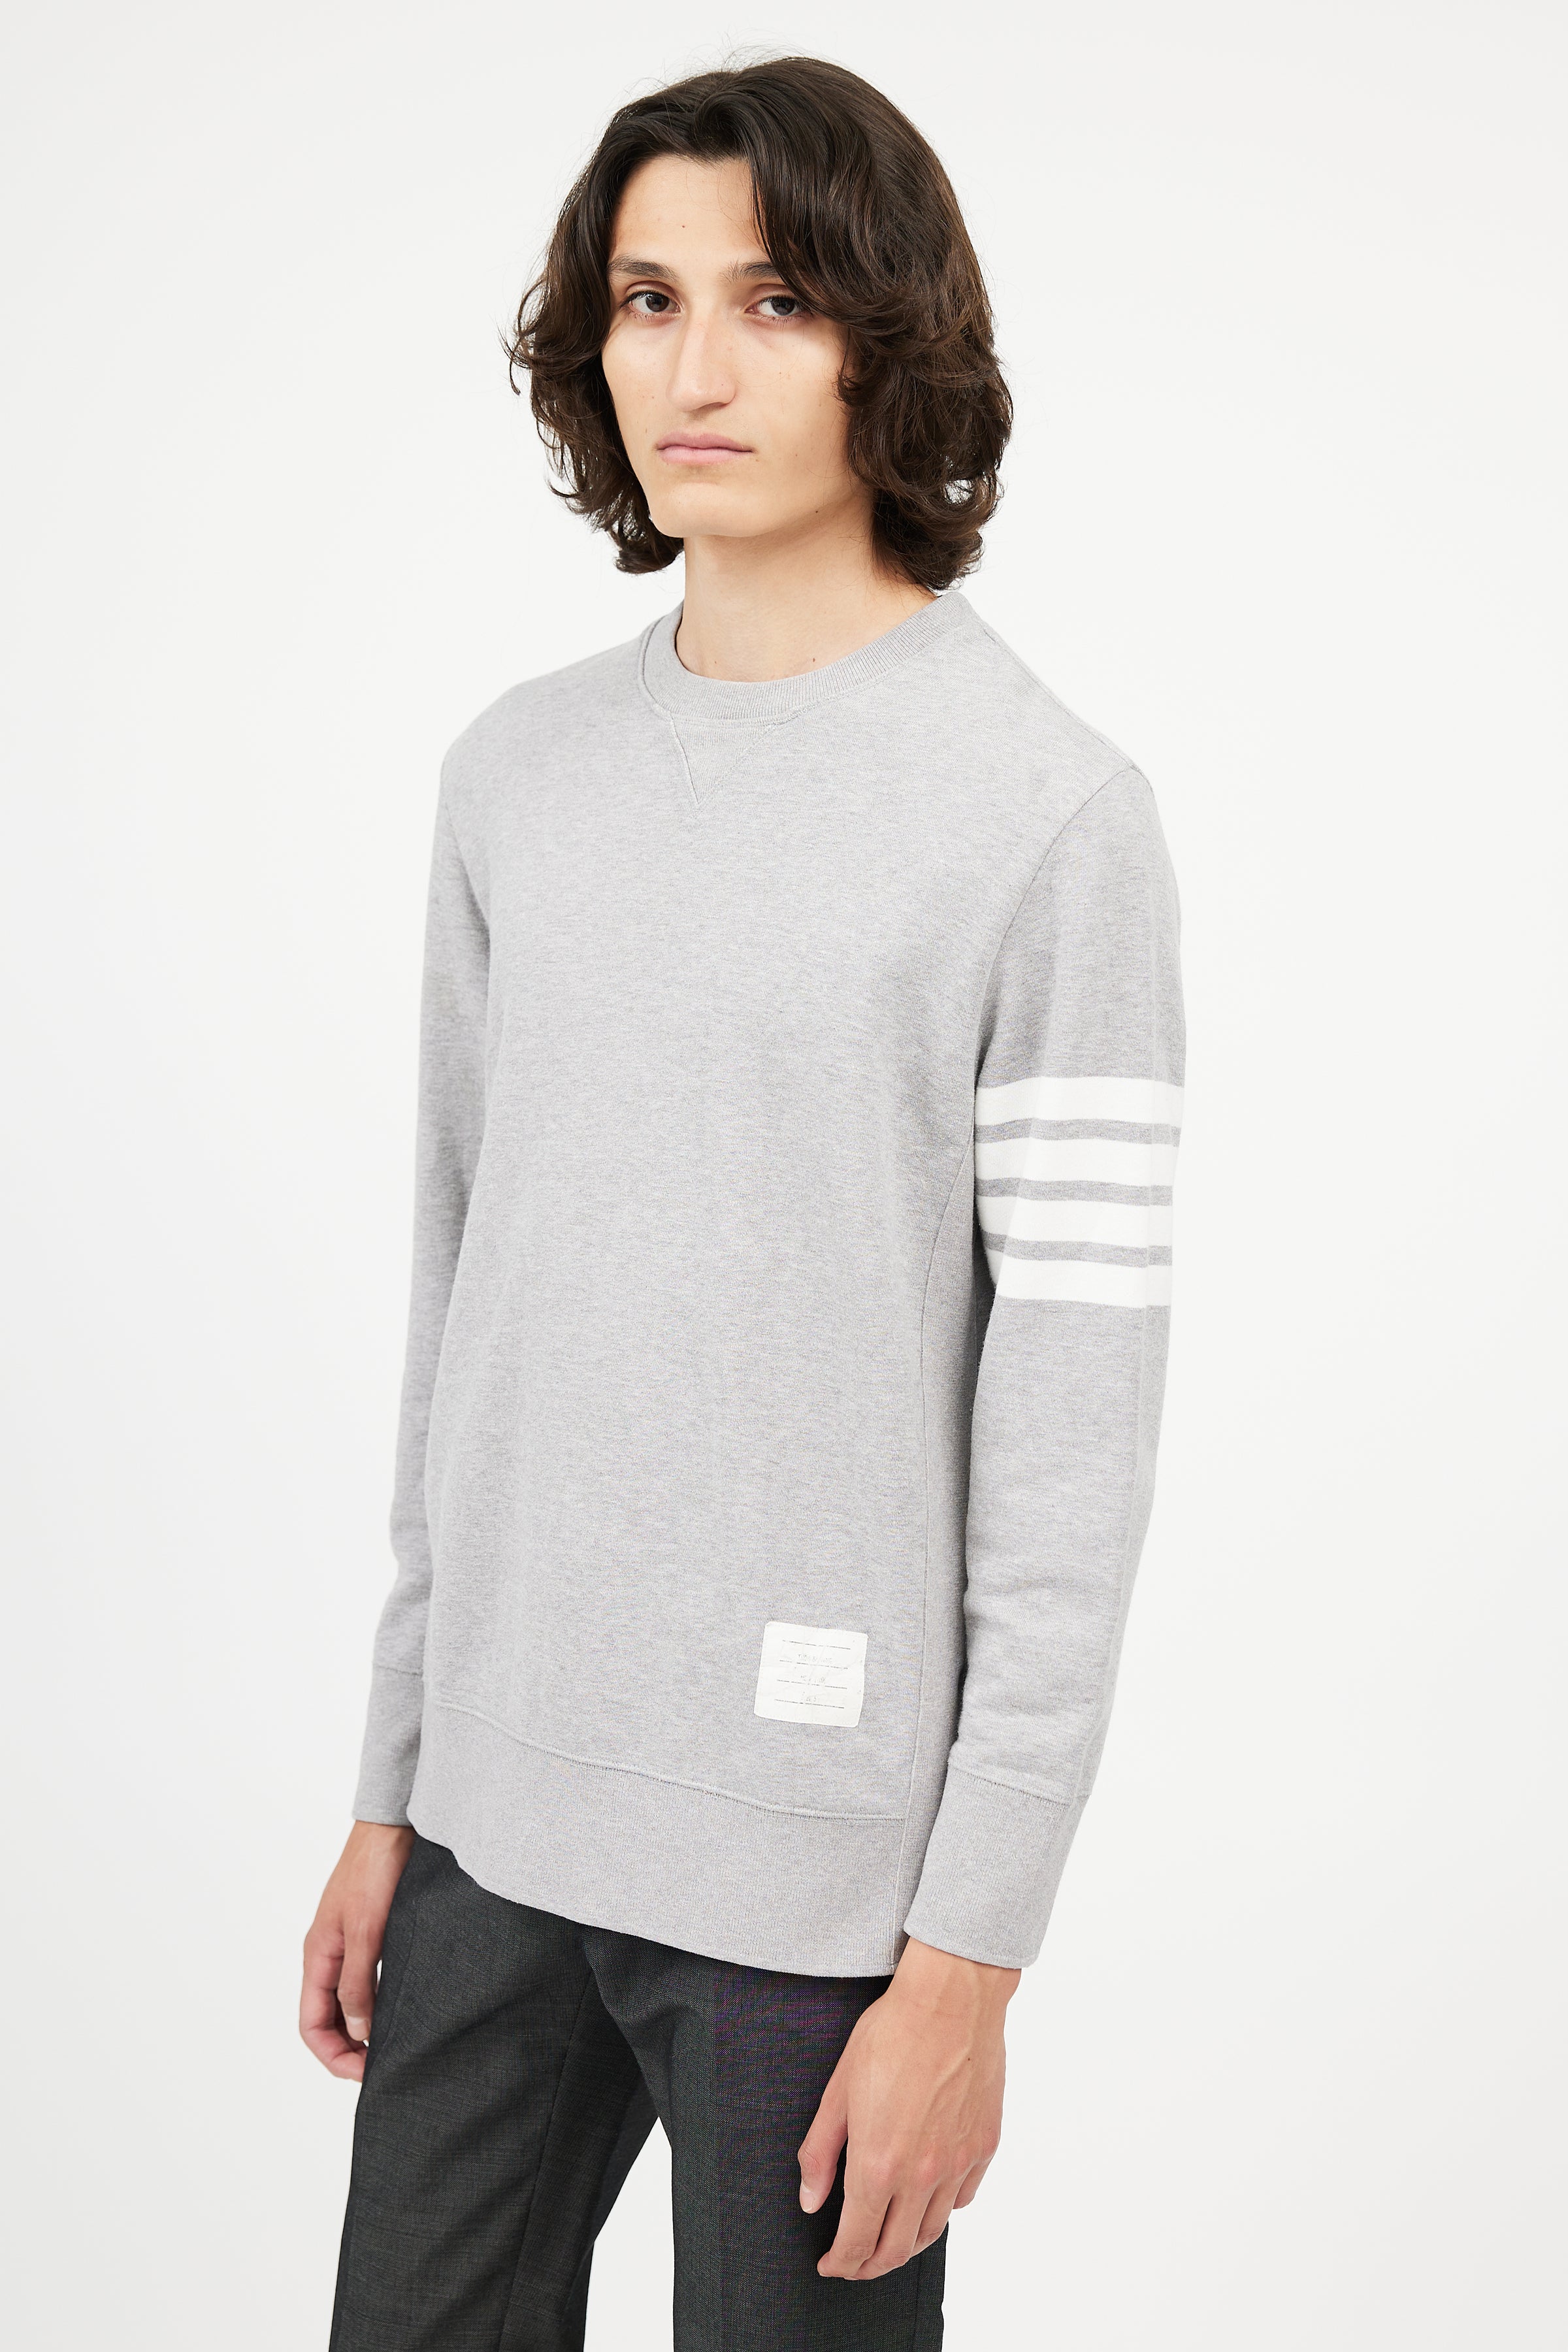 Thom Browne – VSP Grey Cotton Sweatshirt 4-Bar // Consignment